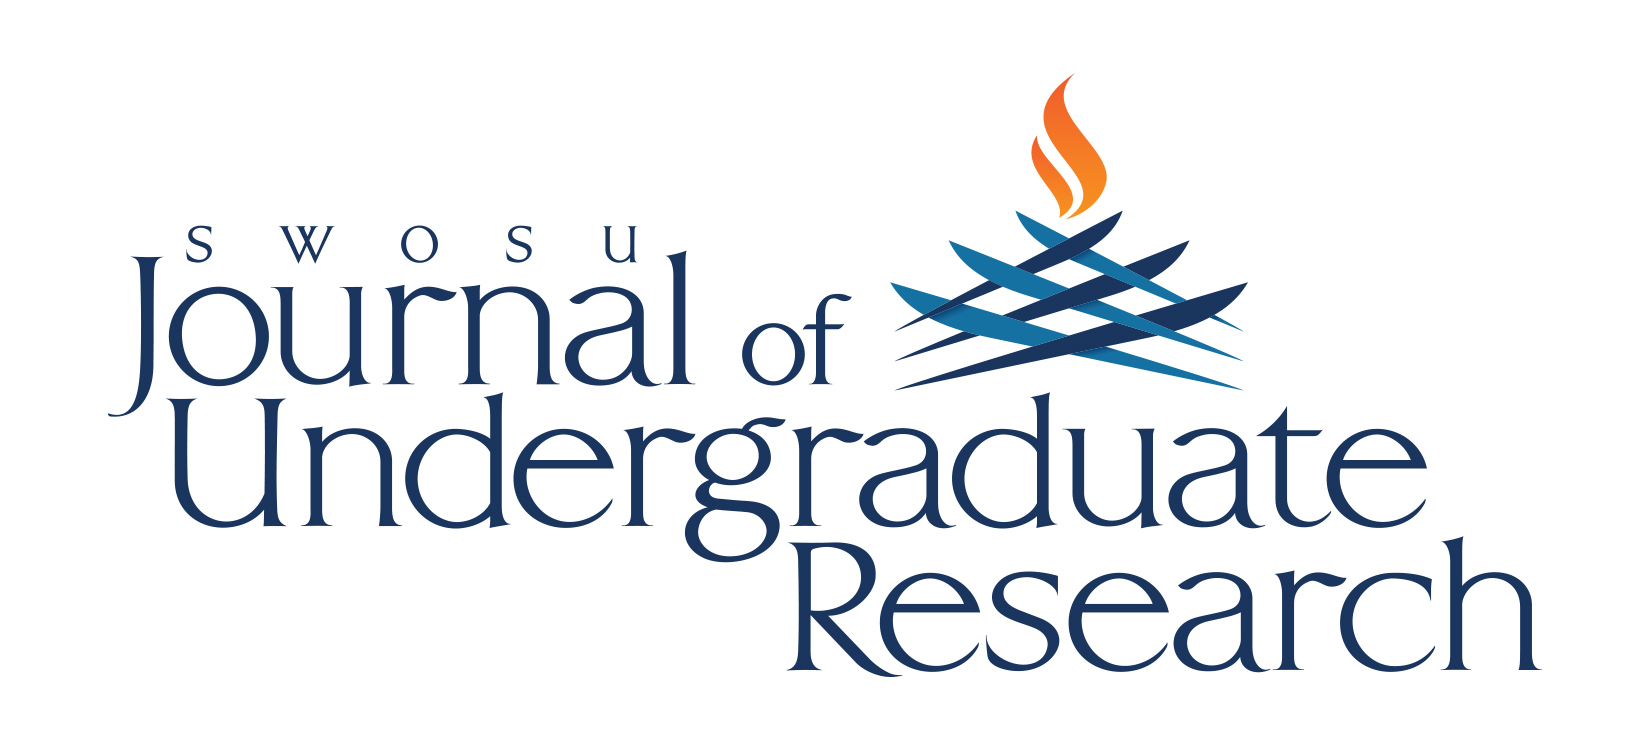 SWOSU Journal of Undergraduate Research